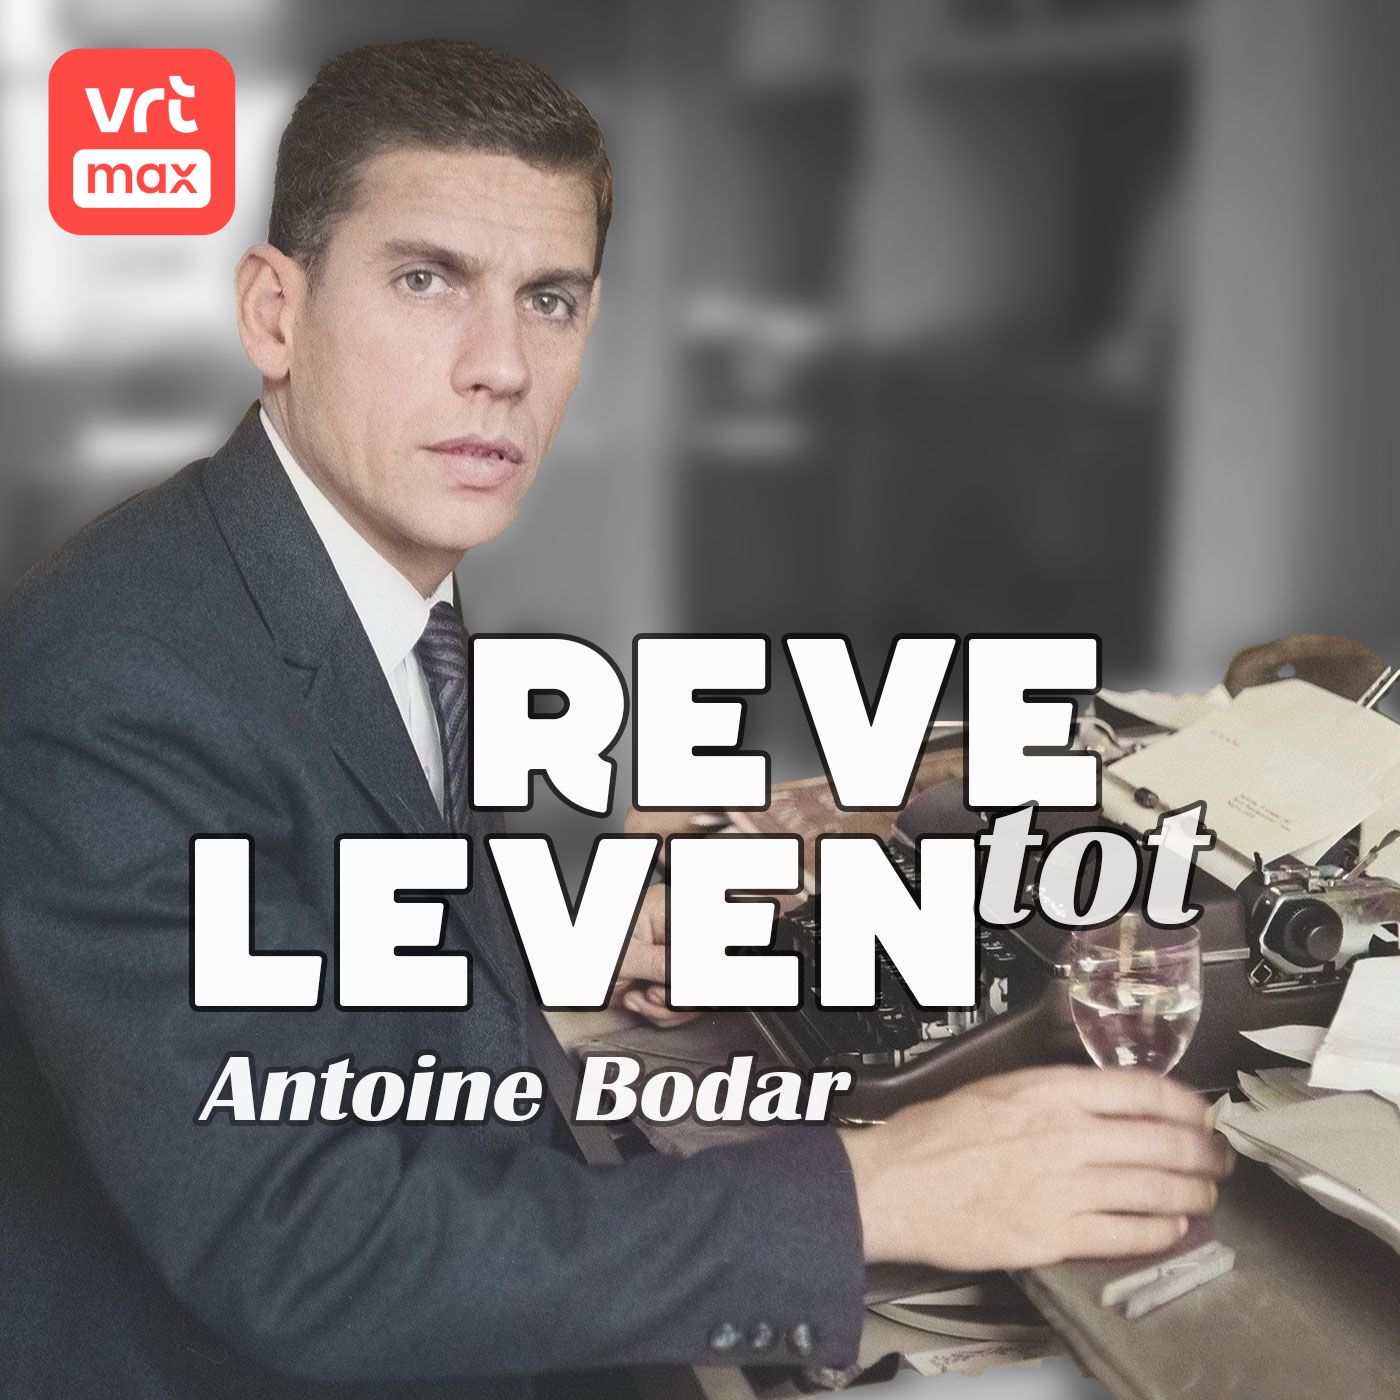 Antoine Bodar